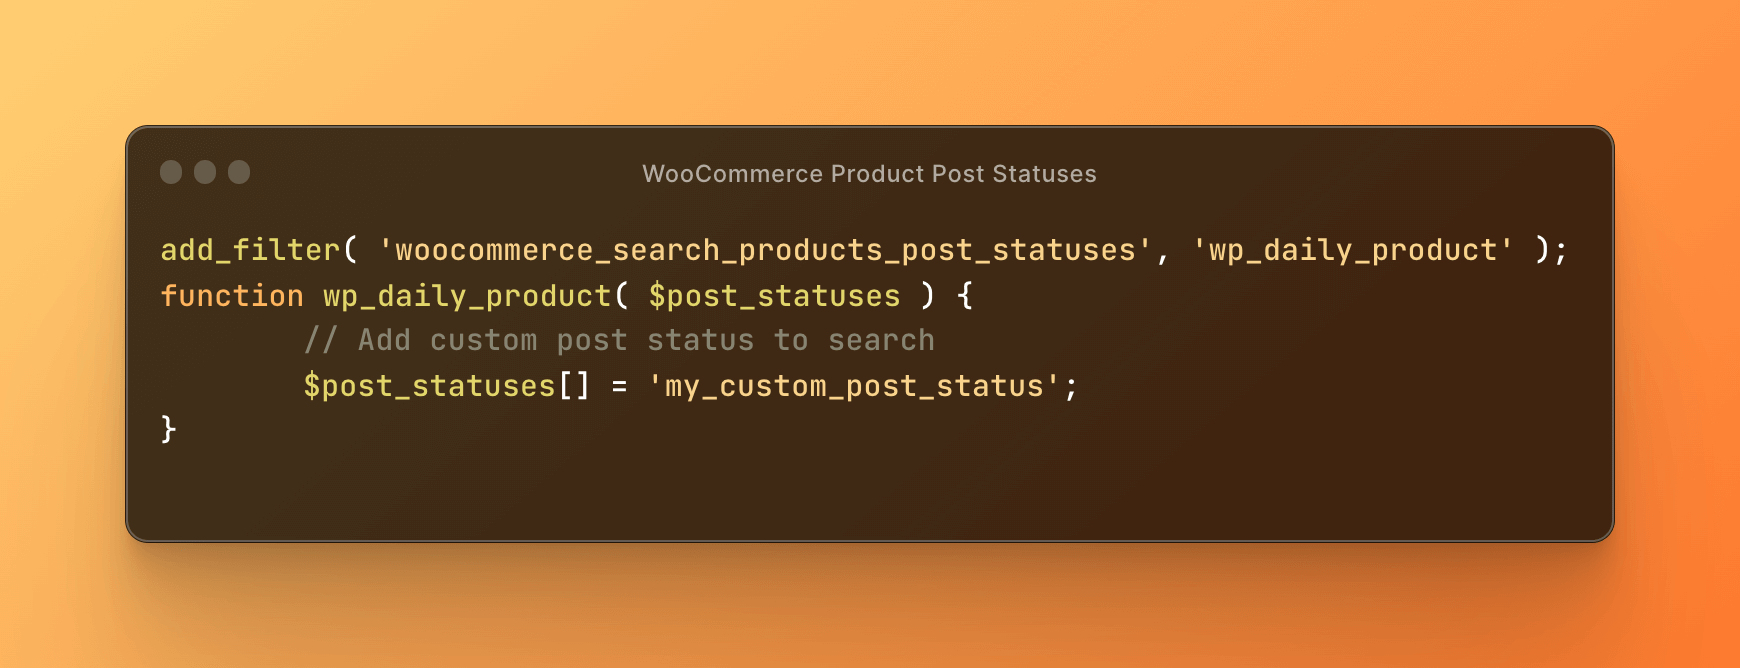 WooCommerce Product Post Statuses